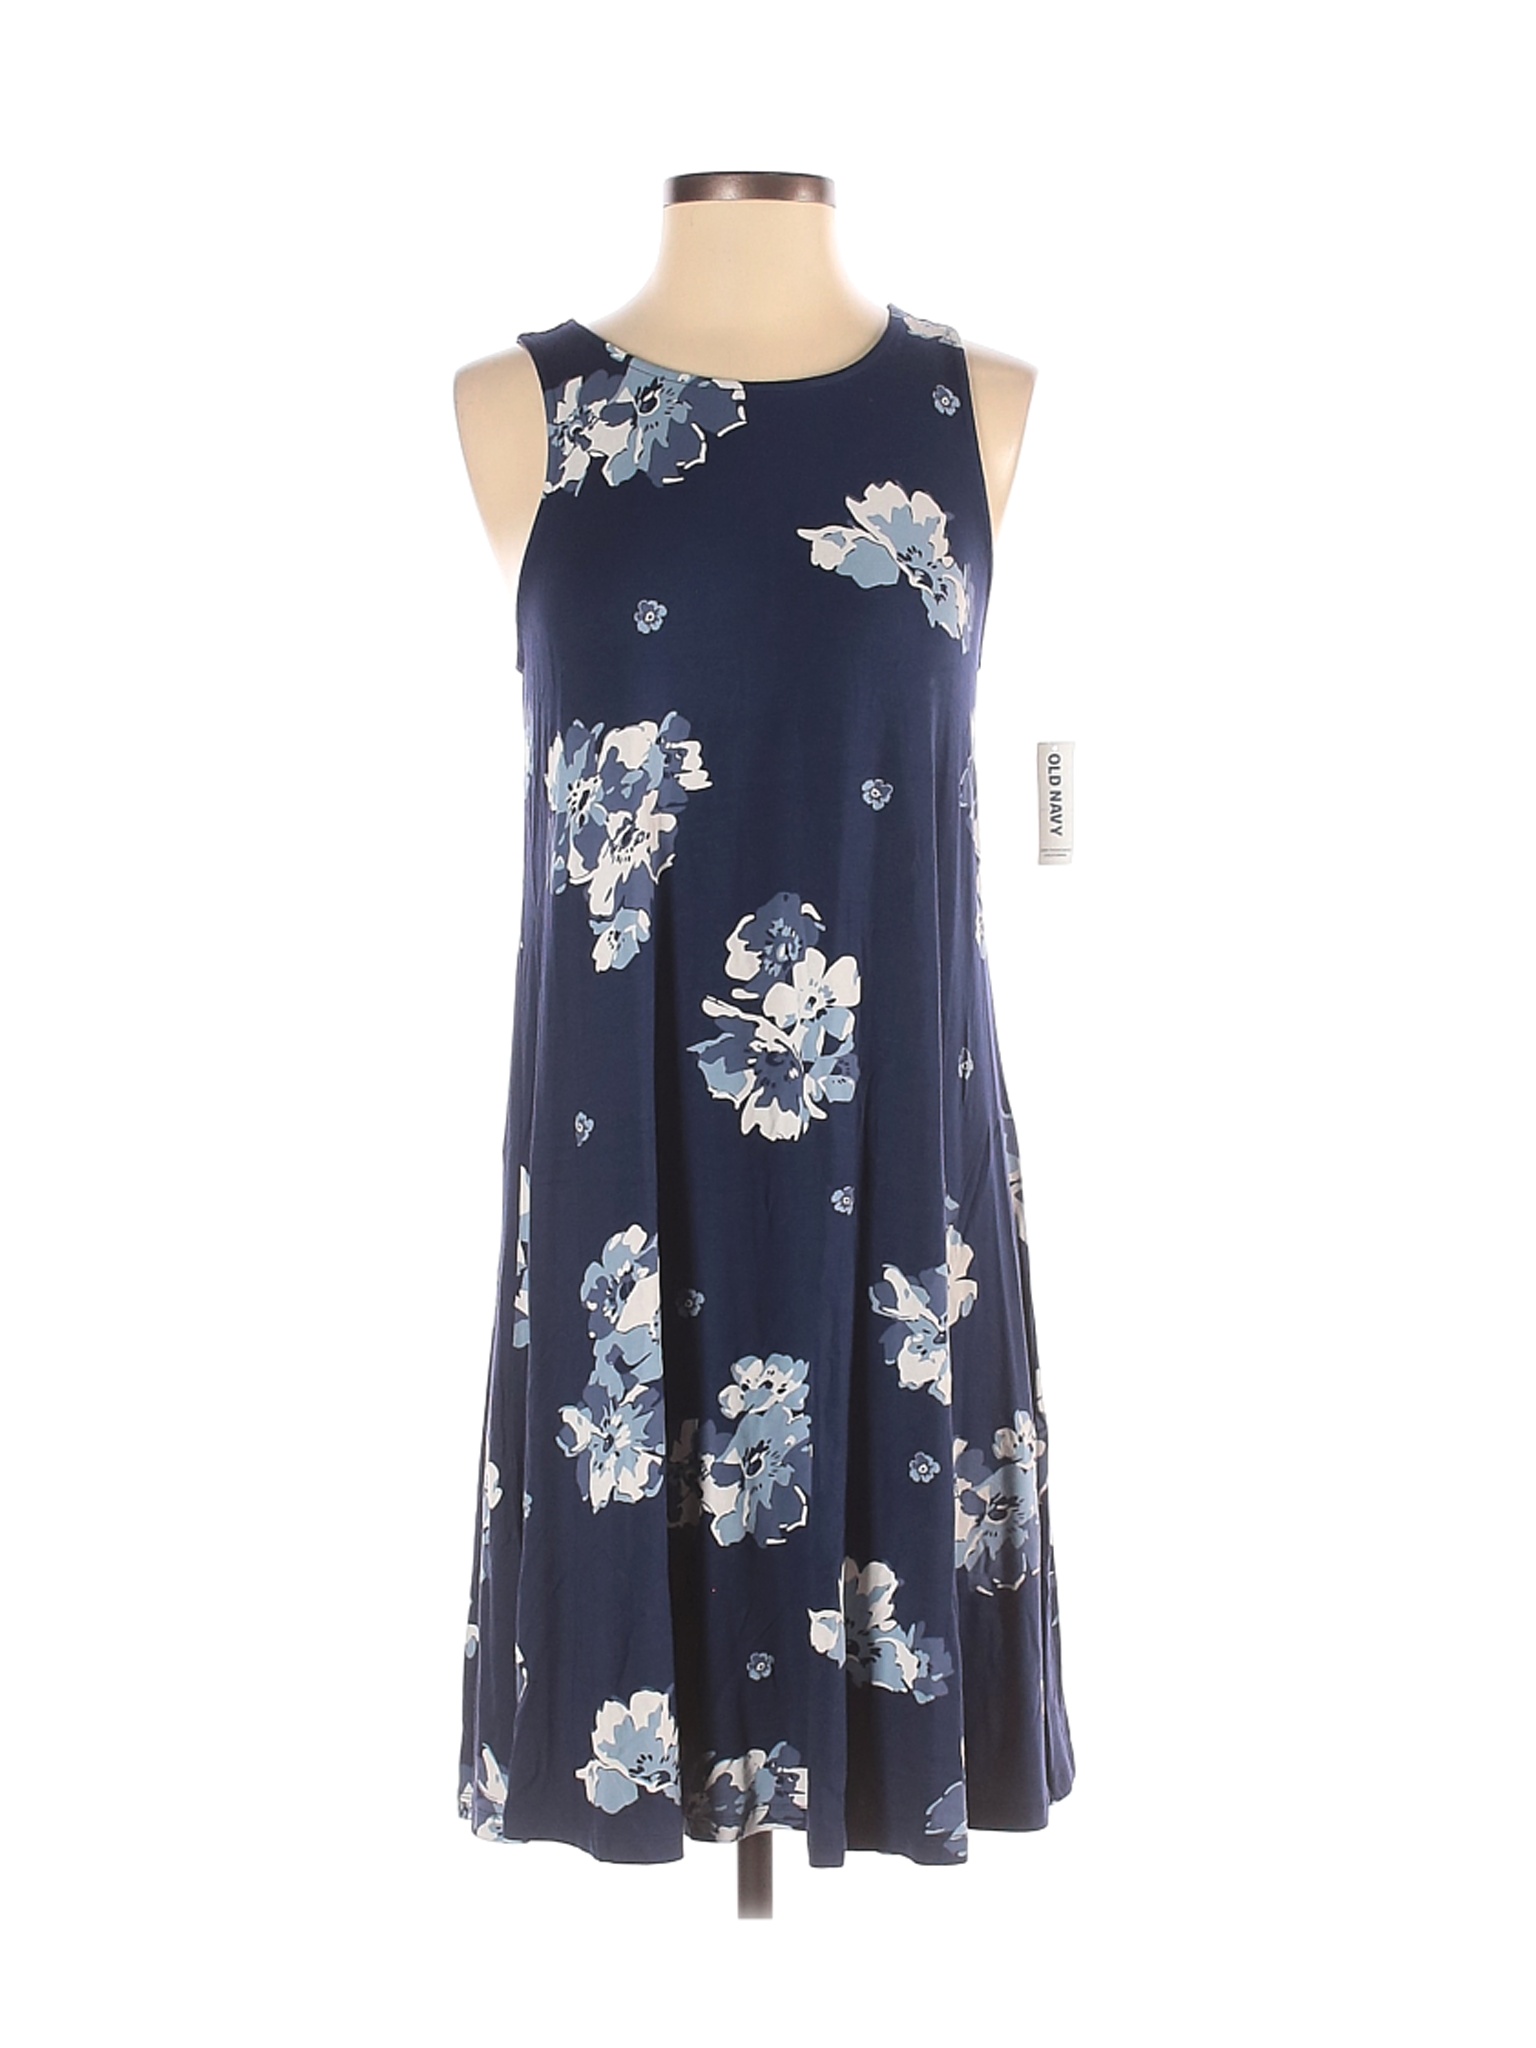 NWT Old Navy Women Blue Casual Dress S | eBay